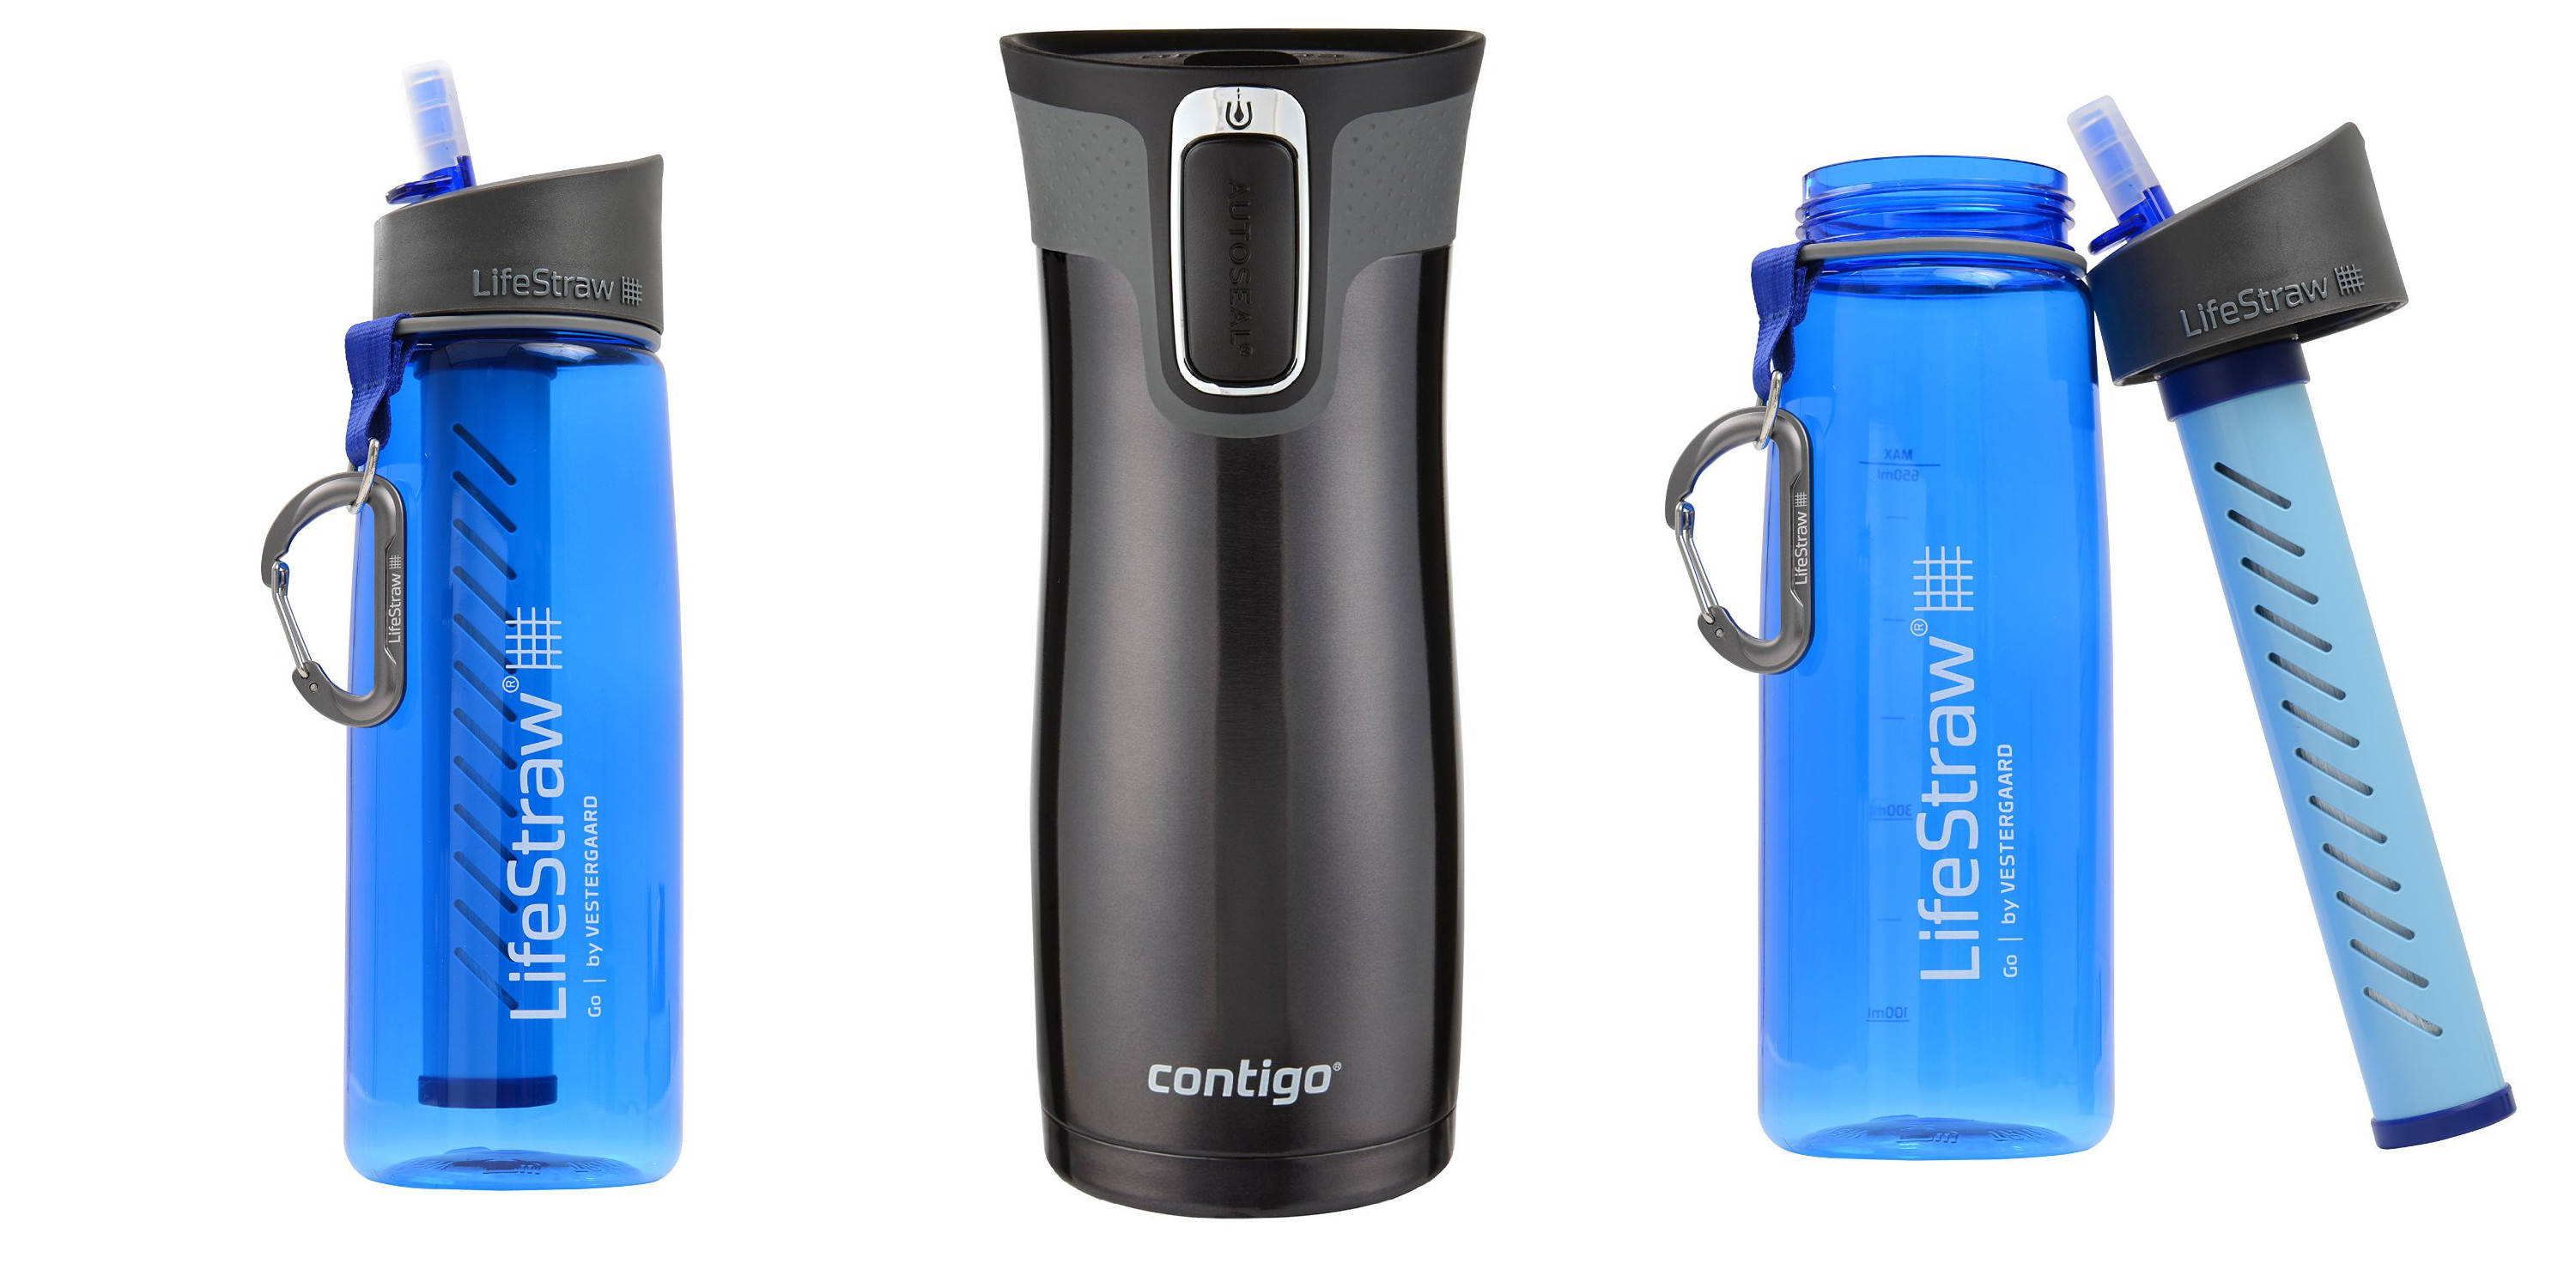 LifeStraw Go Filtered Water Bottle $22 + Contigo's Stainless Steel